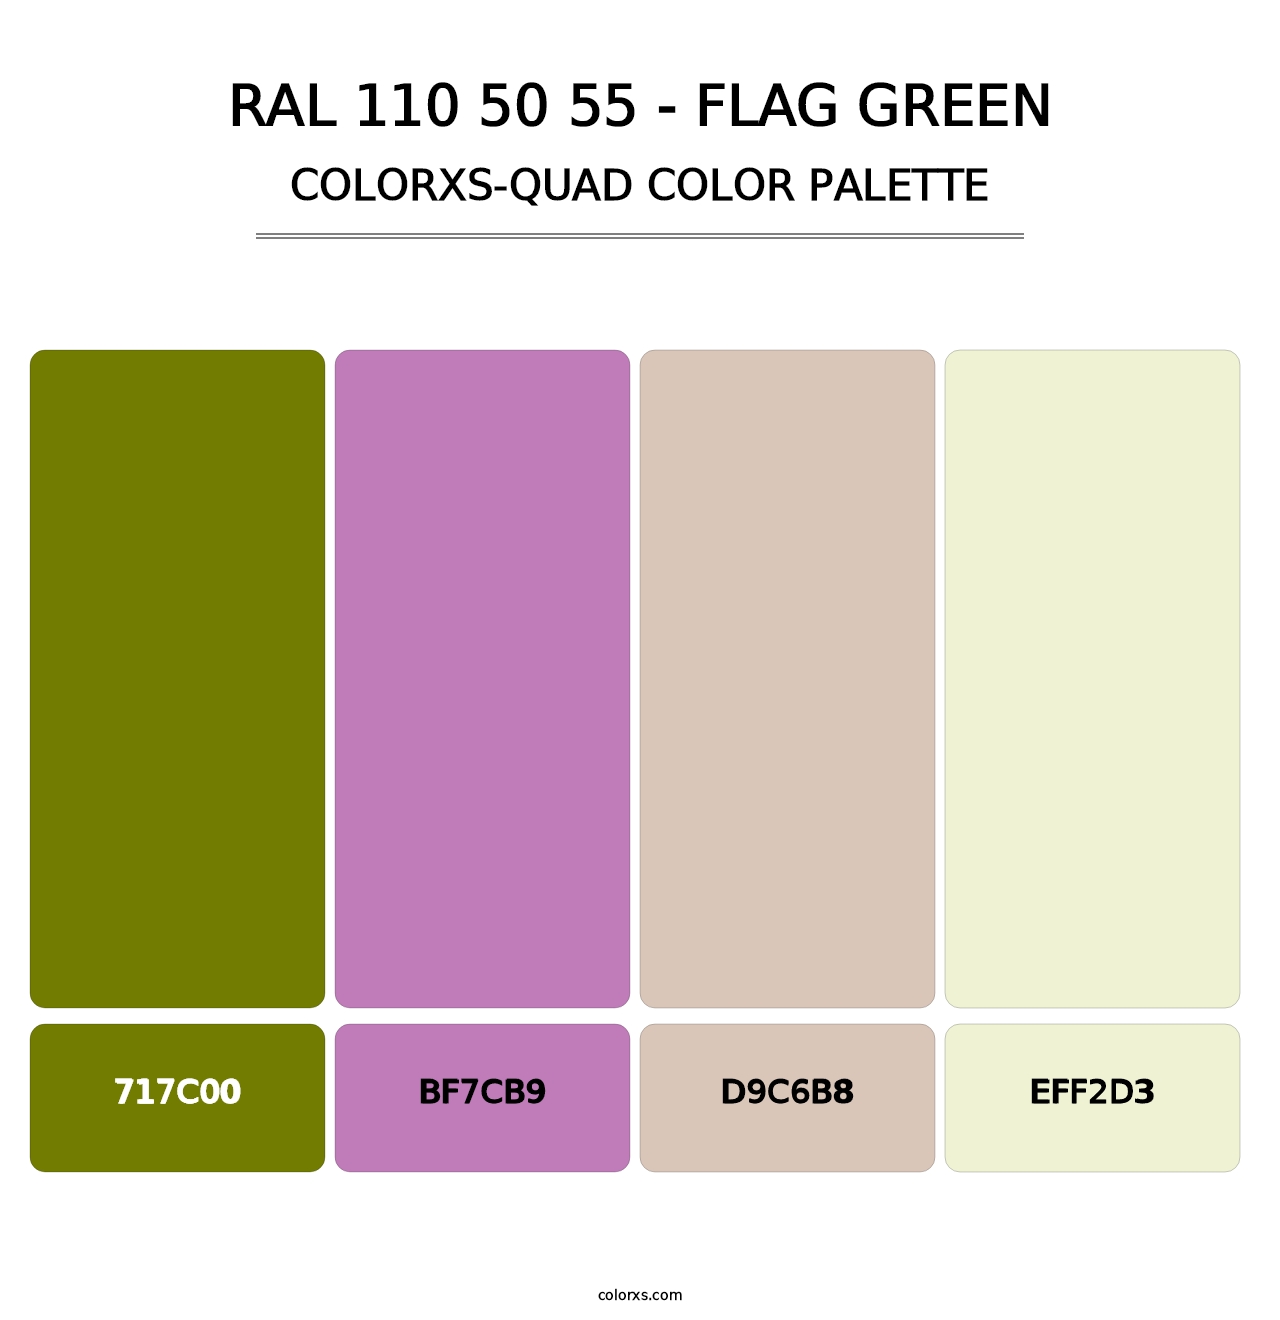 RAL 110 50 55 - Flag Green - Colorxs Quad Palette